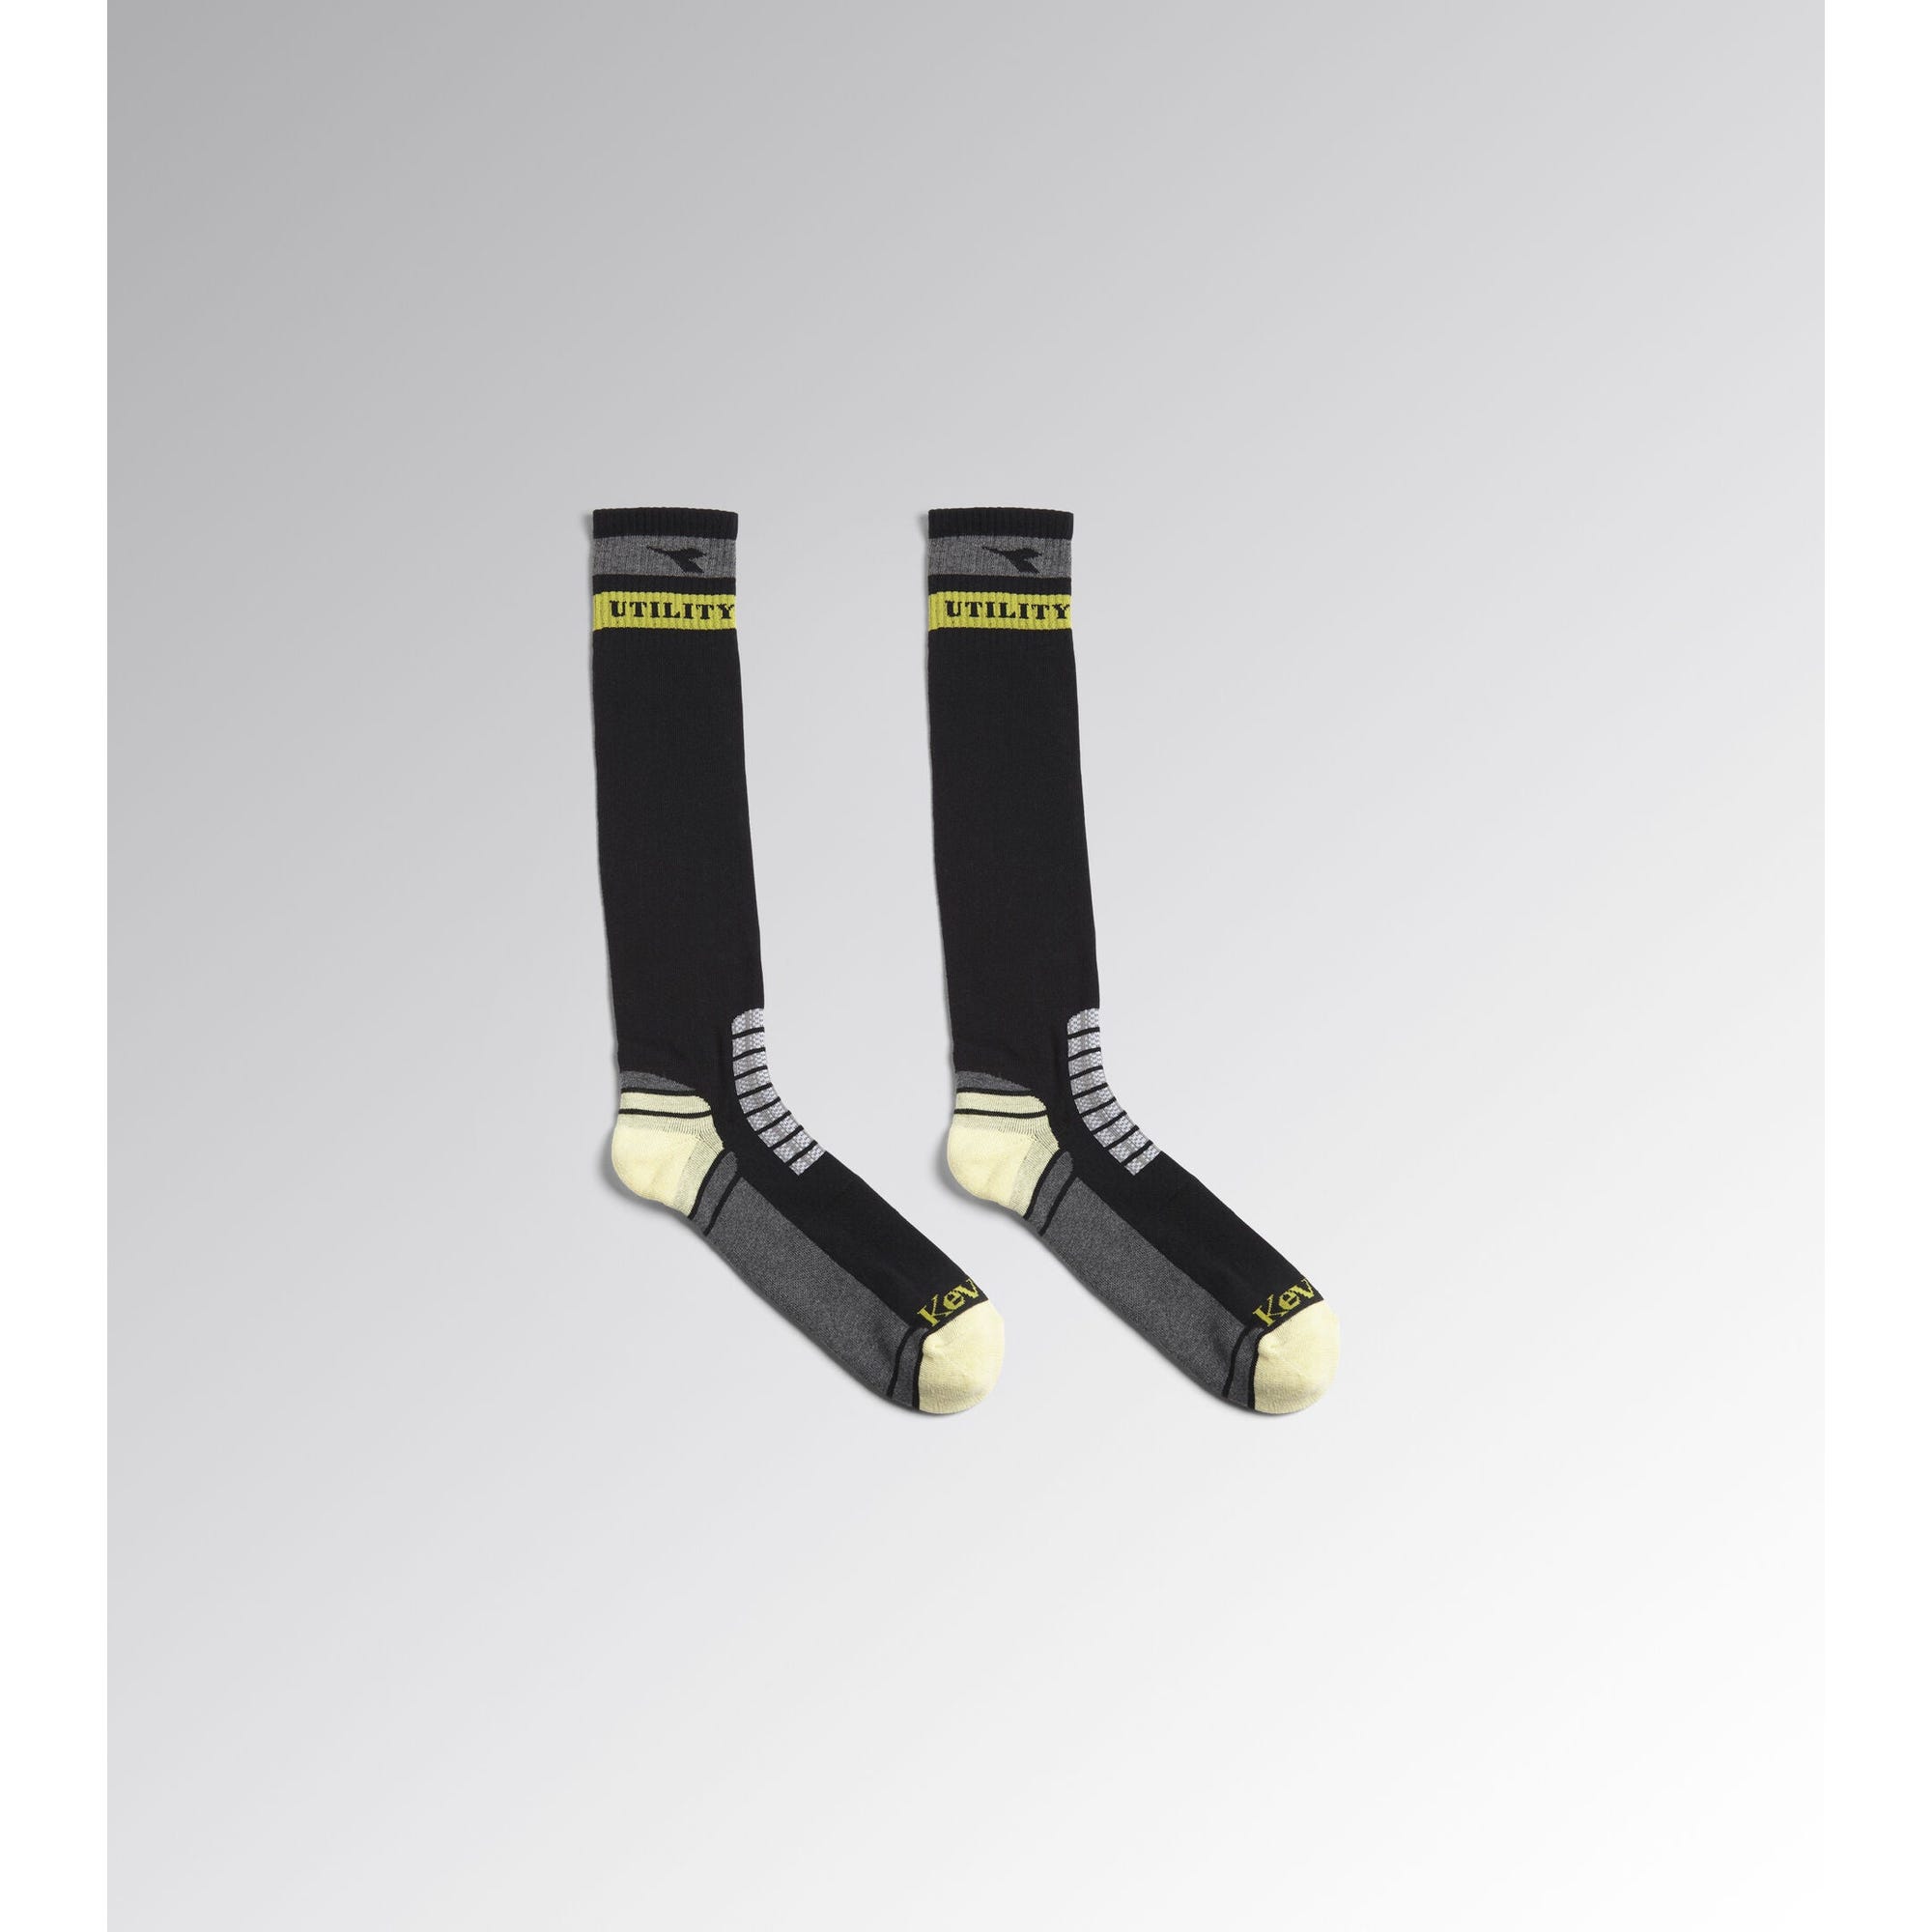 Chaussettes de travail Diadora TECHNICAL WIN Noir / Gris XL 3